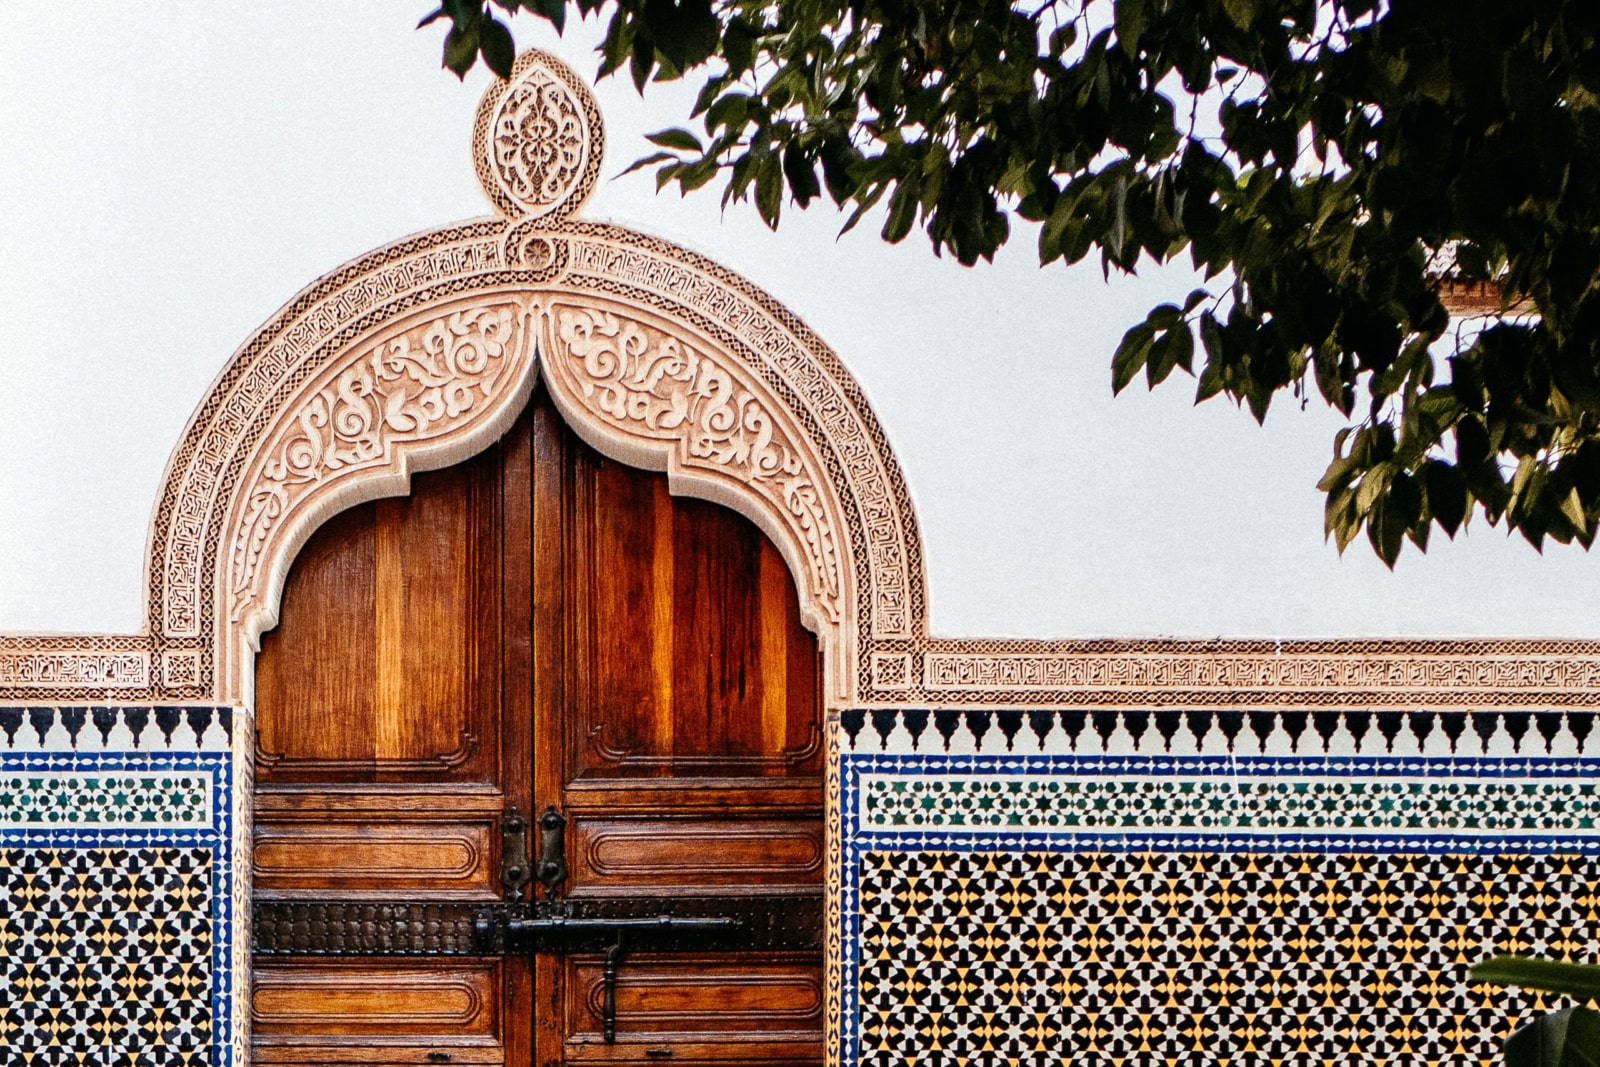 Nyd de smukke detaljer i Marrakech, marokko